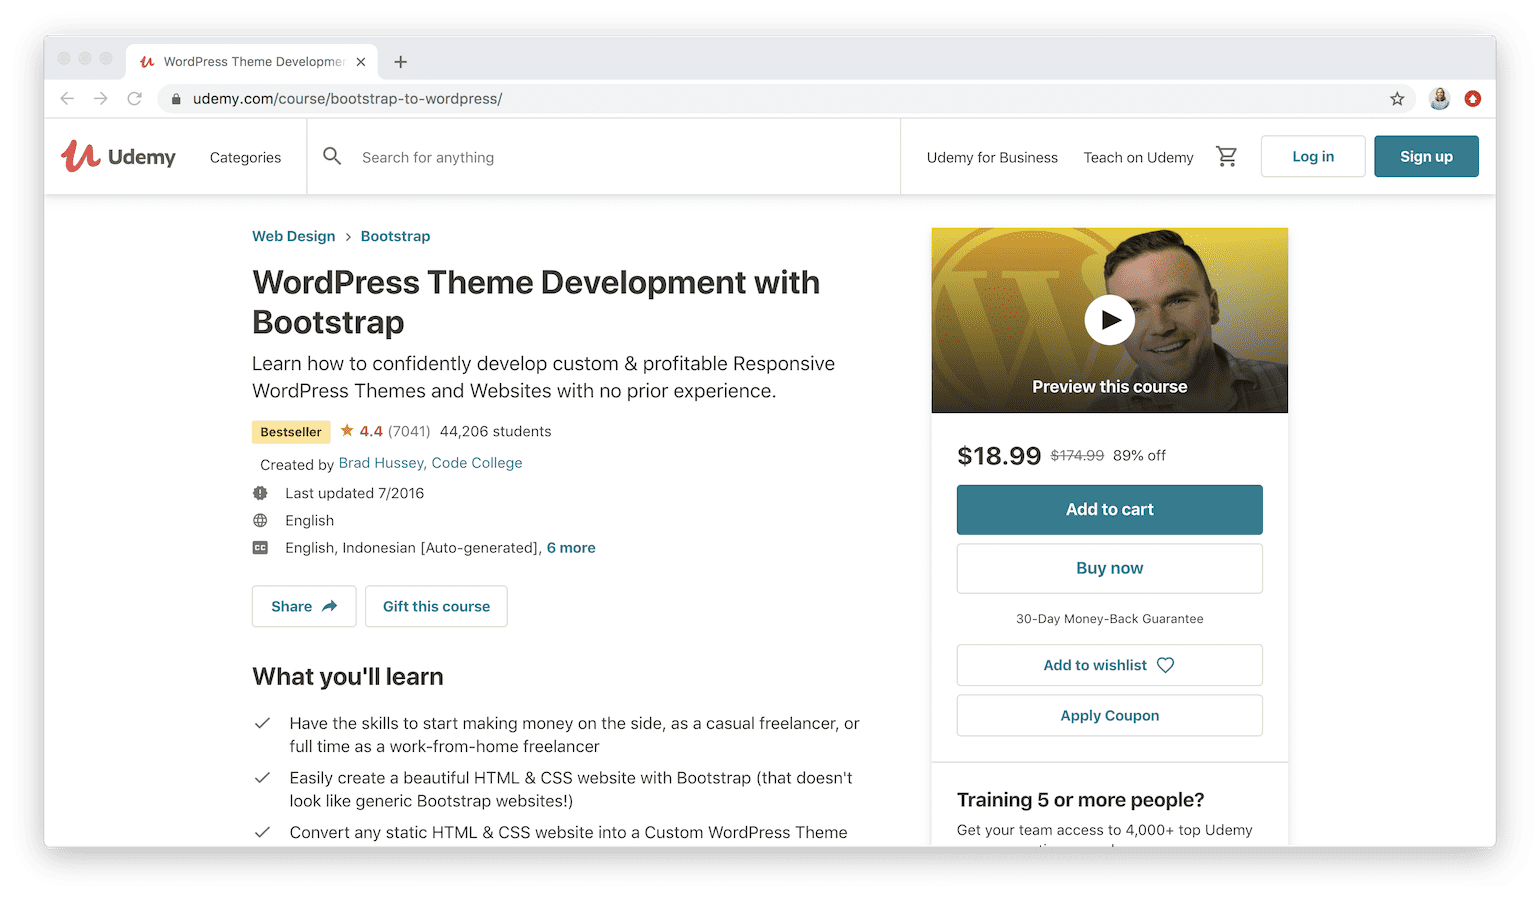 WordPress Theme Development with Bootstrap on Udemy